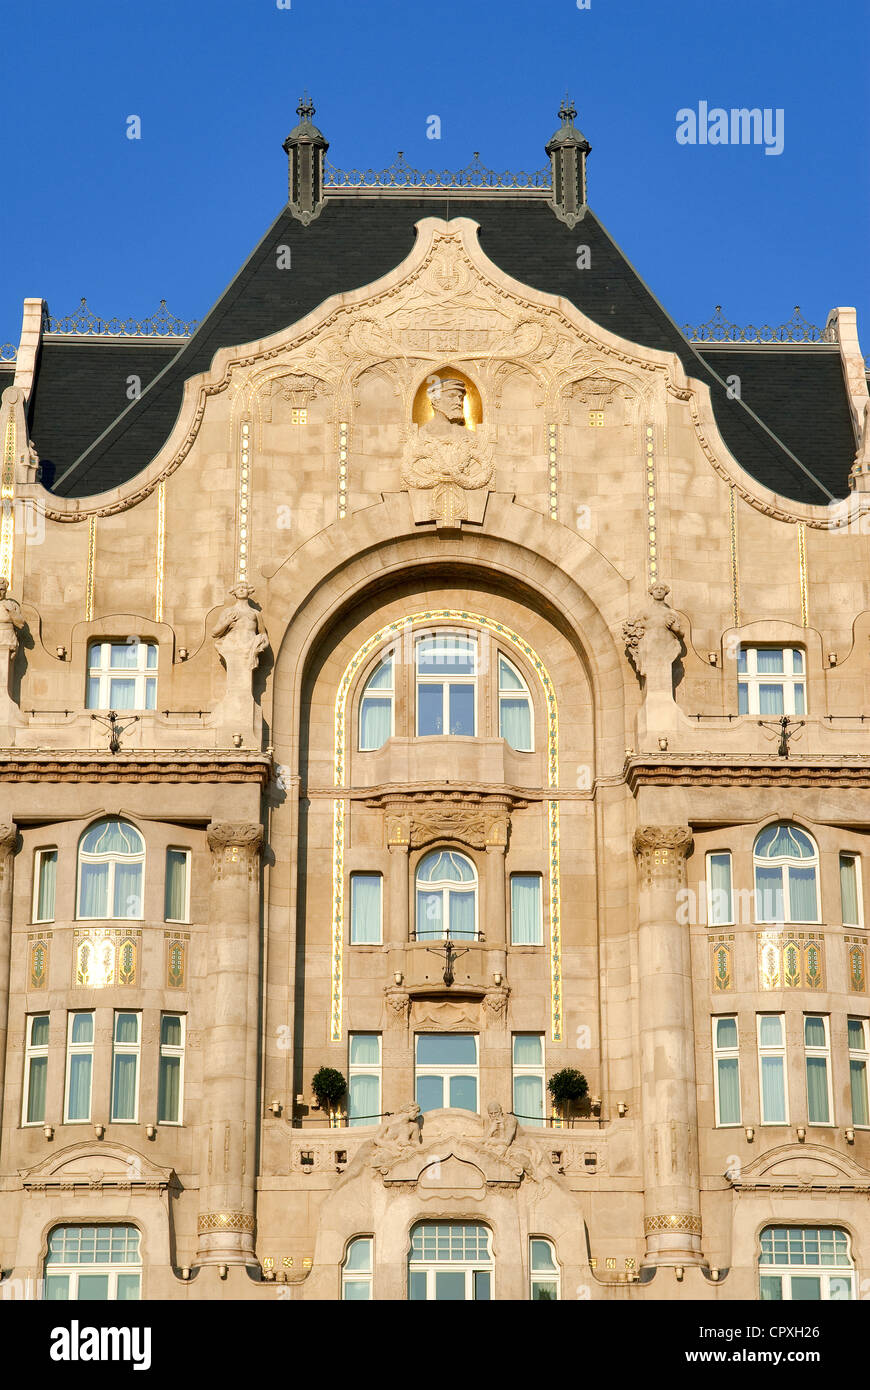 Hungary, Budapest, the Gresham Palace, Art Nouveau style of 1907, today converted into a Hotel, the Gresham Palace Stock Photo